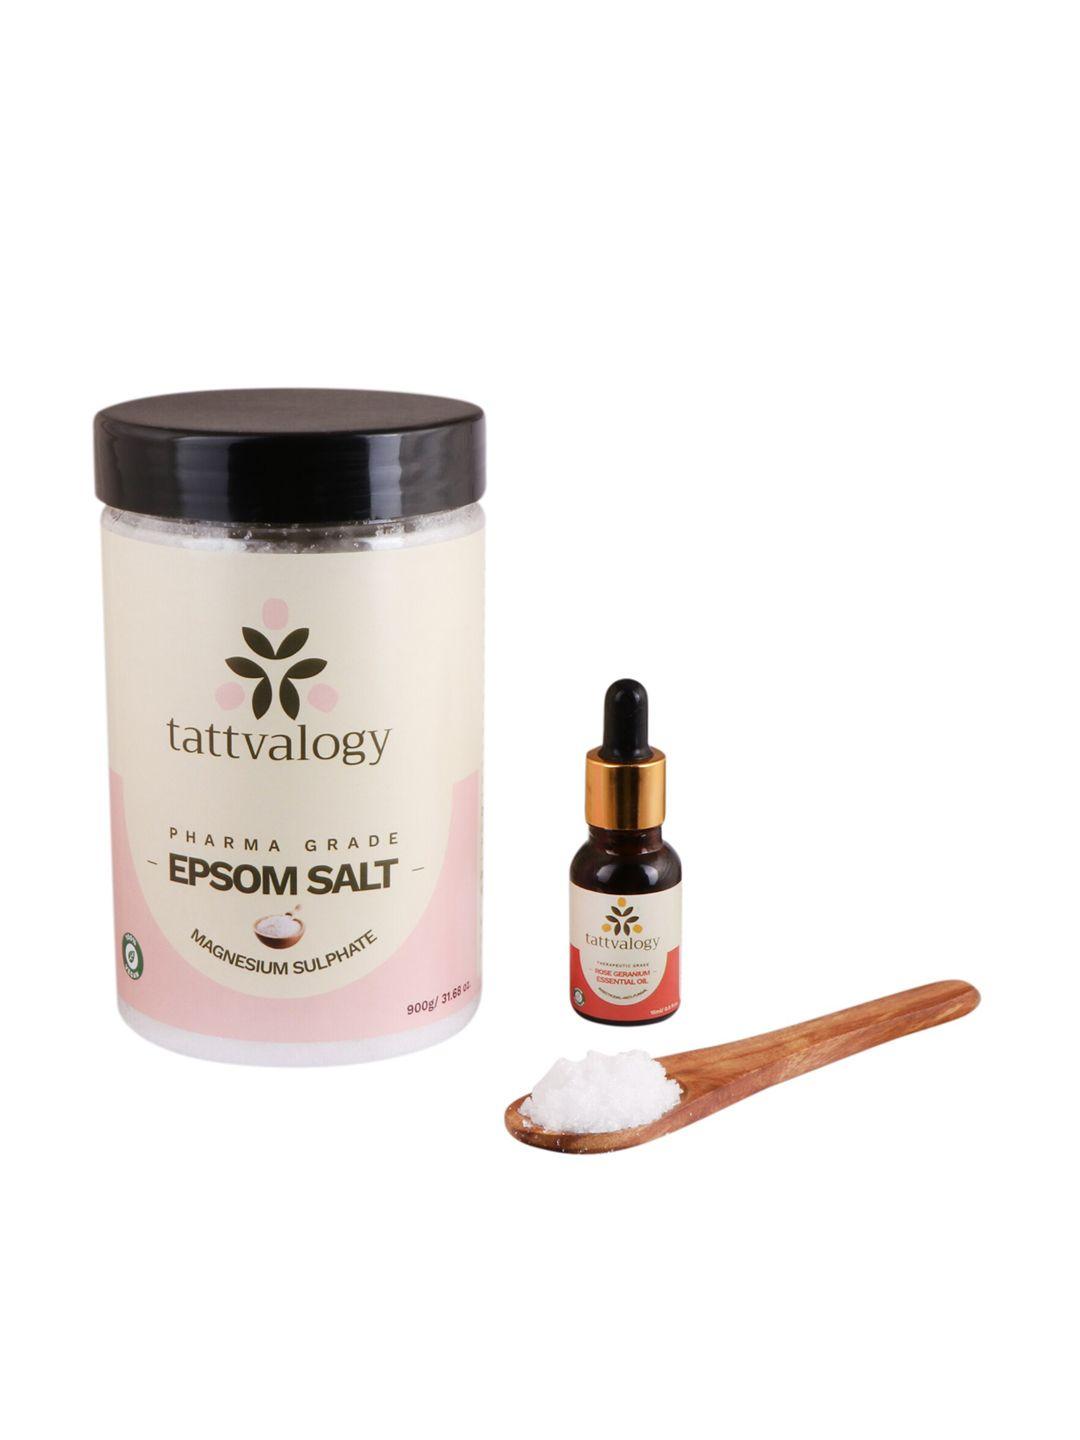 tattvalogy epsom salt with rose geranium essential oil